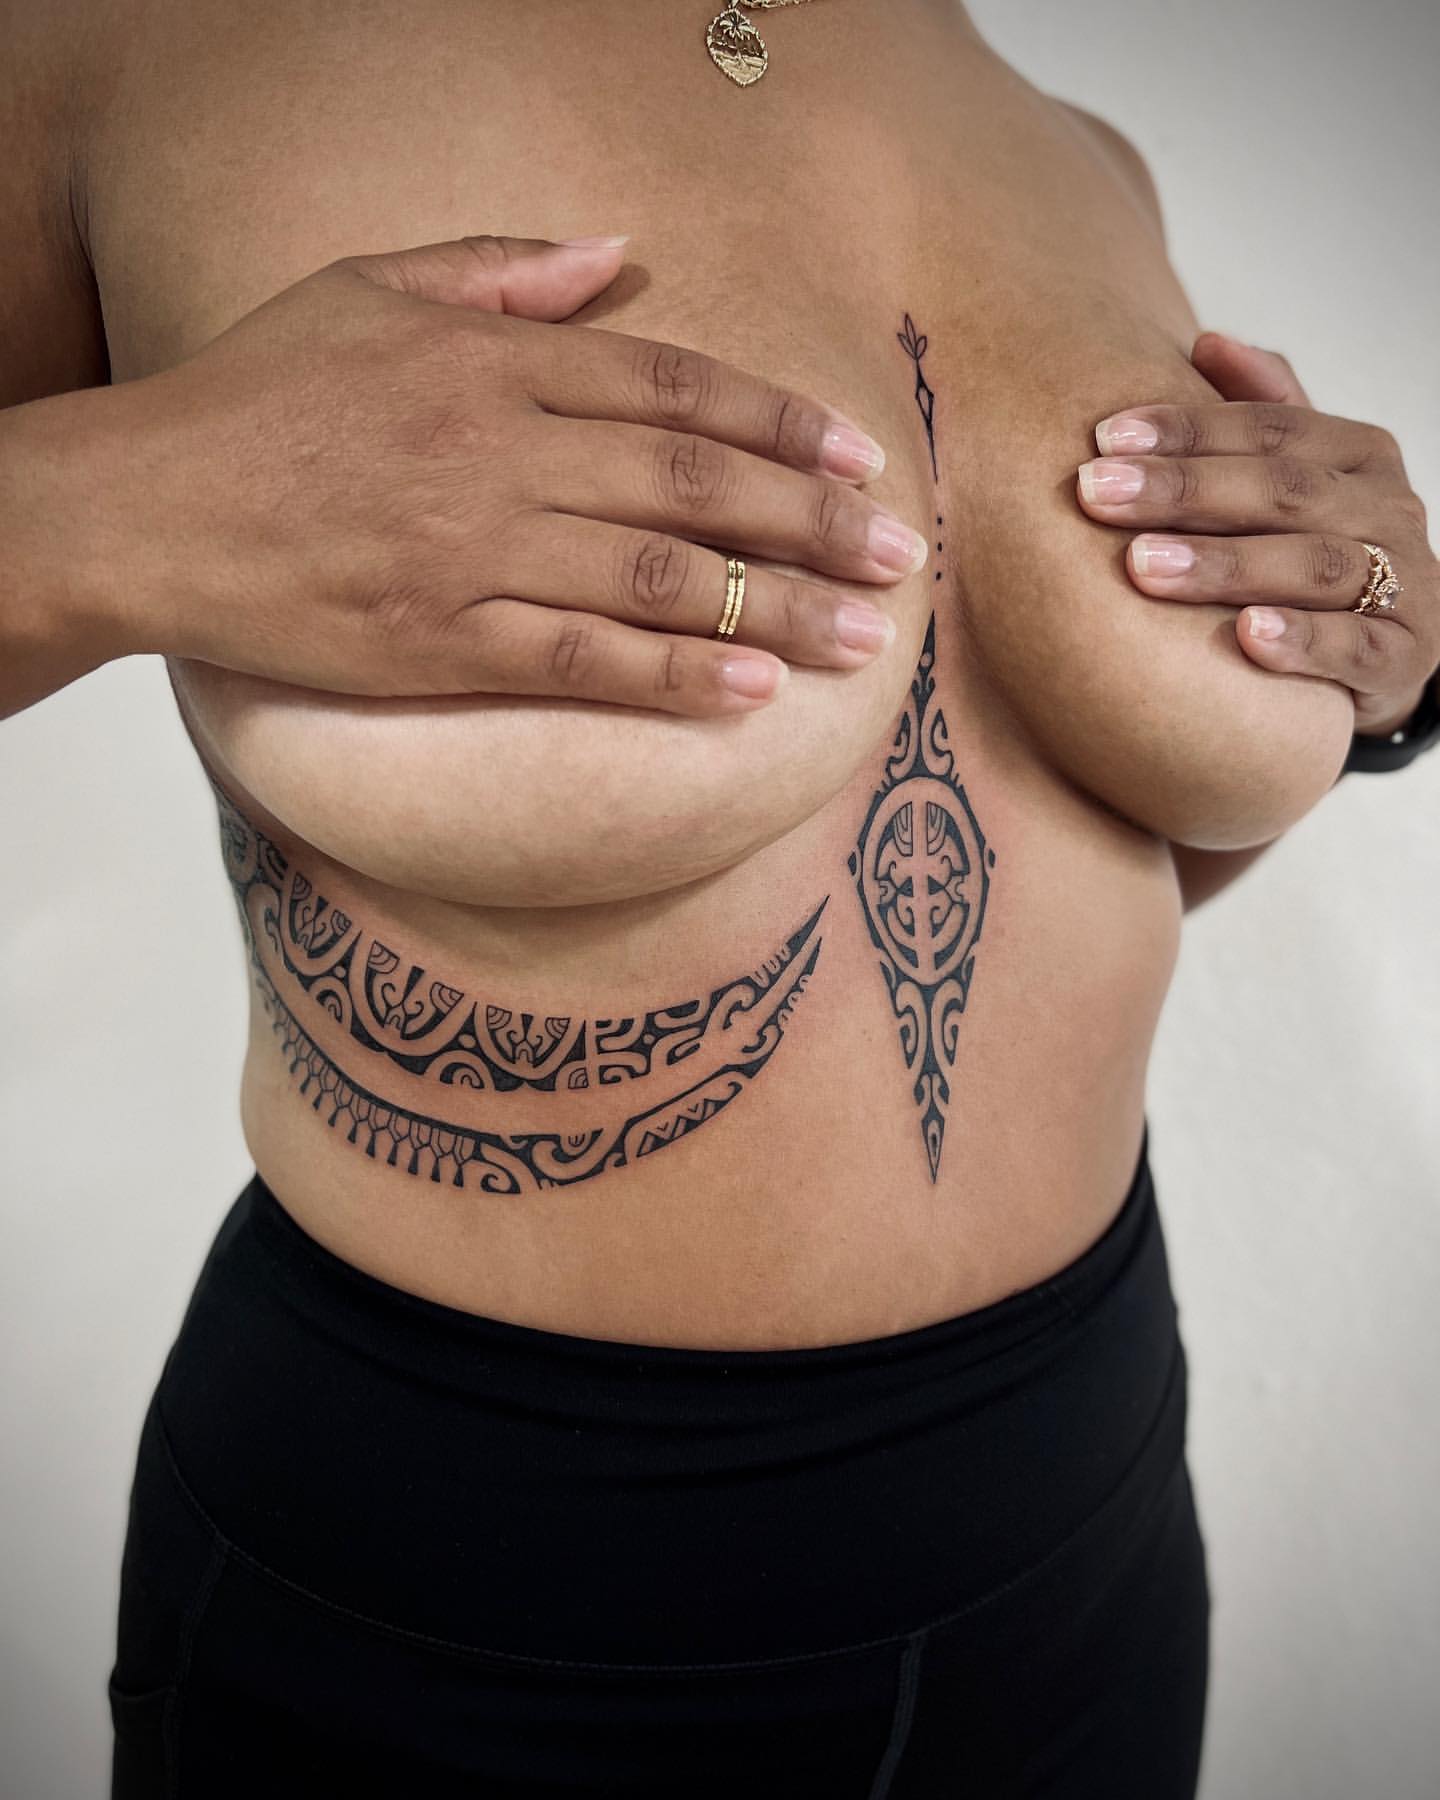 Best Tattoo Ideas for Women 26